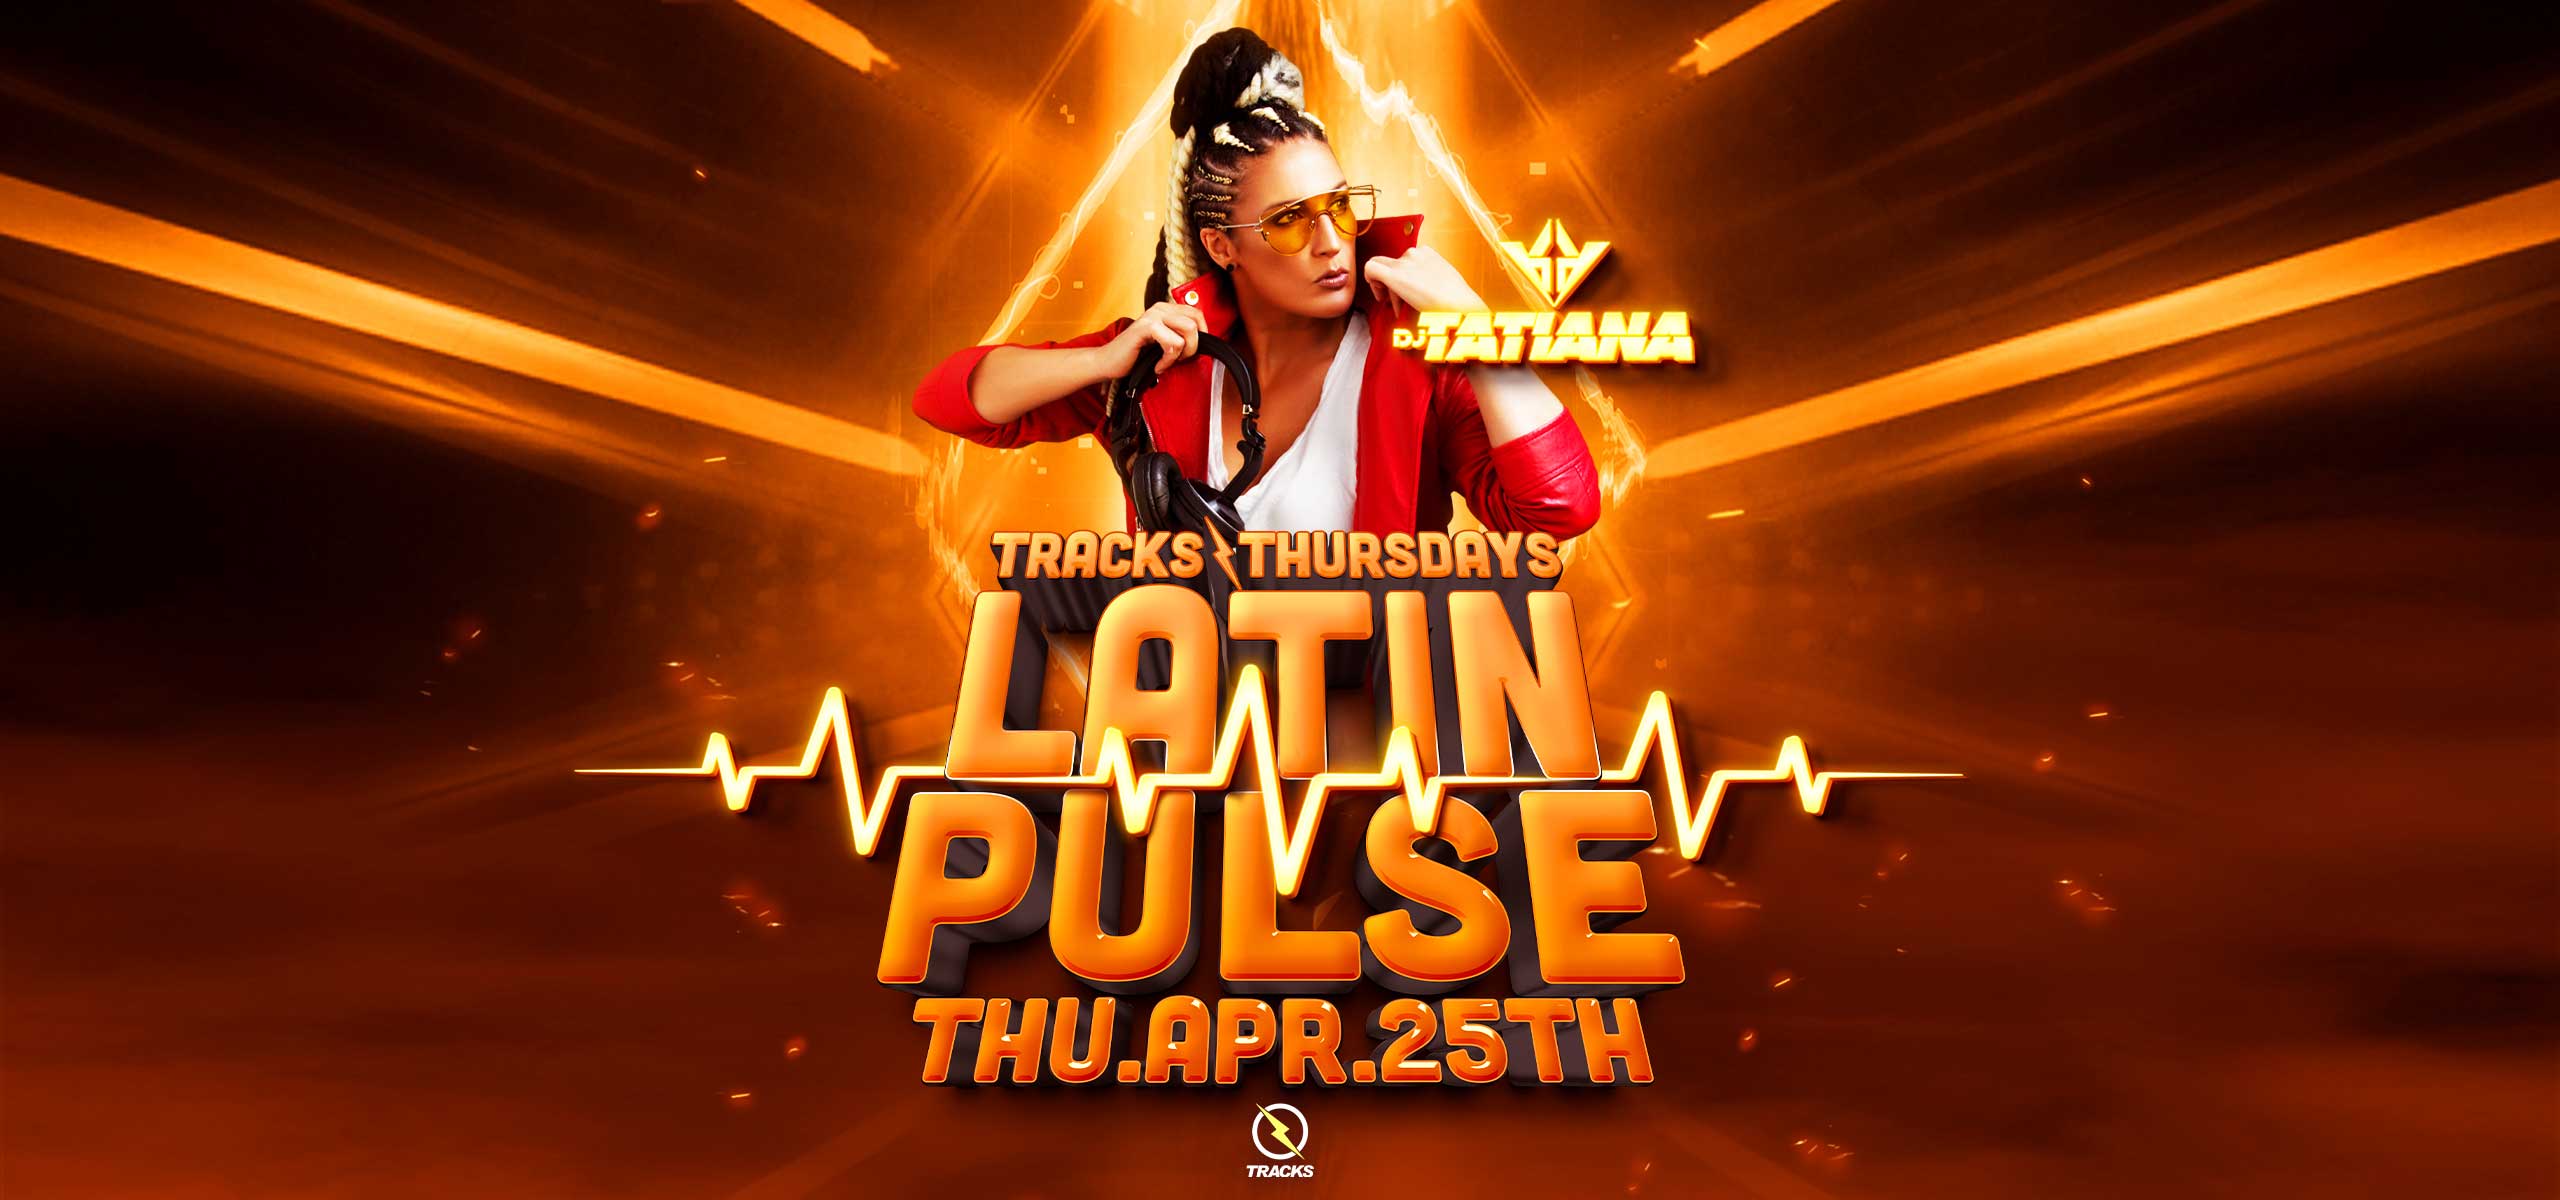 18+ Tracks Thursdays: Latin Pulse Ft. DJ Tatiana+ G2